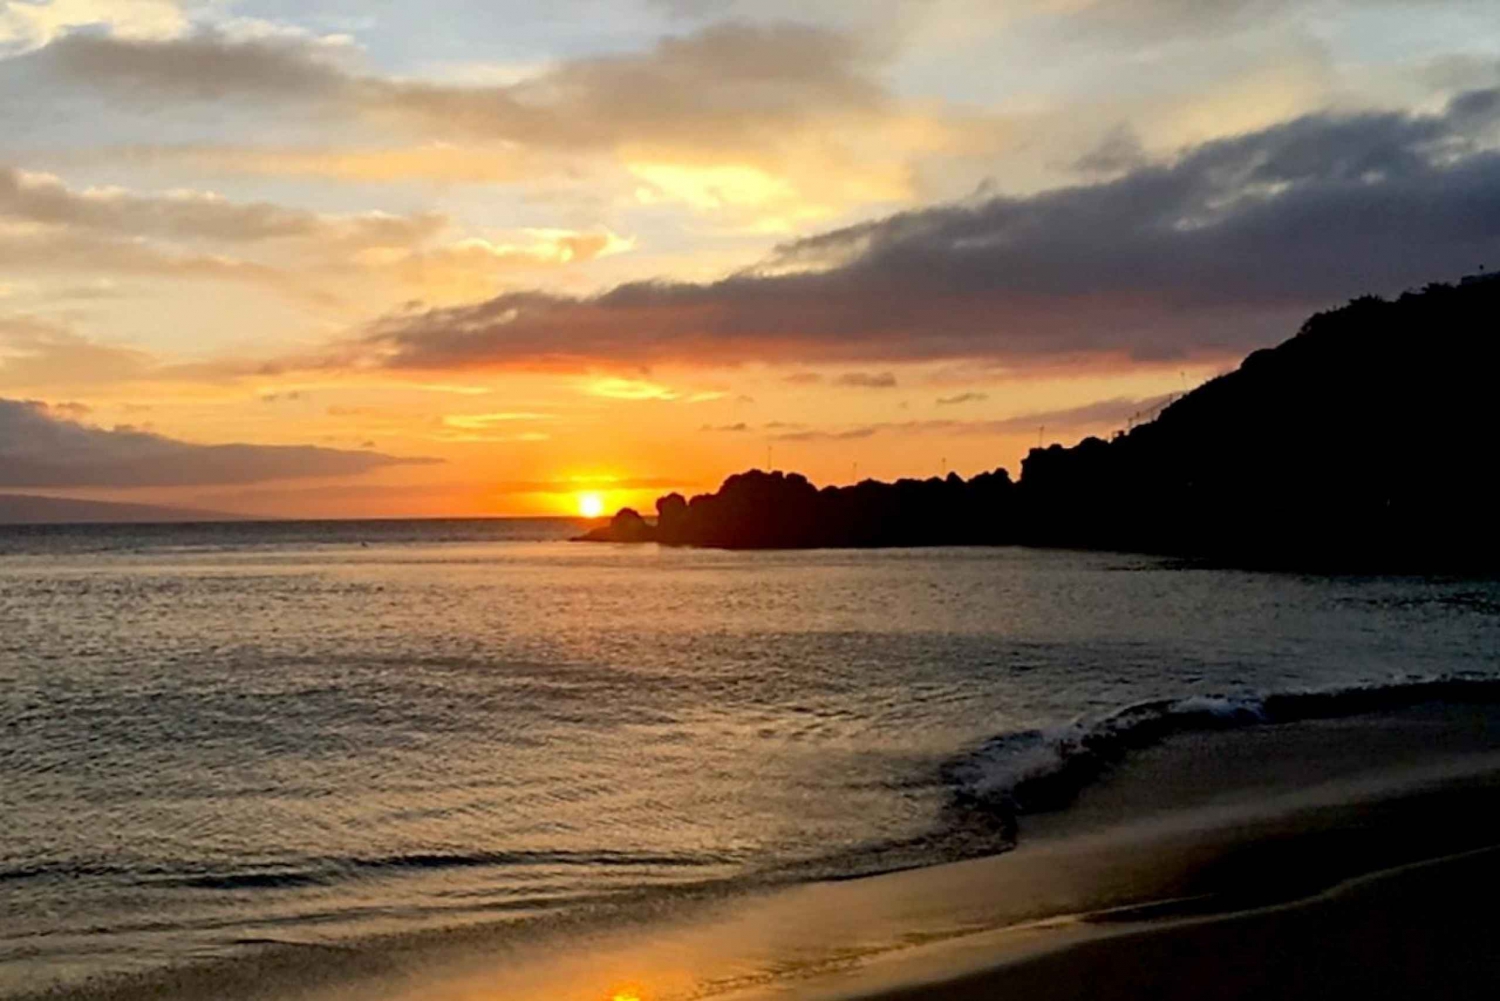 Maui: Cena en velero al atardecer en Ka'anapali